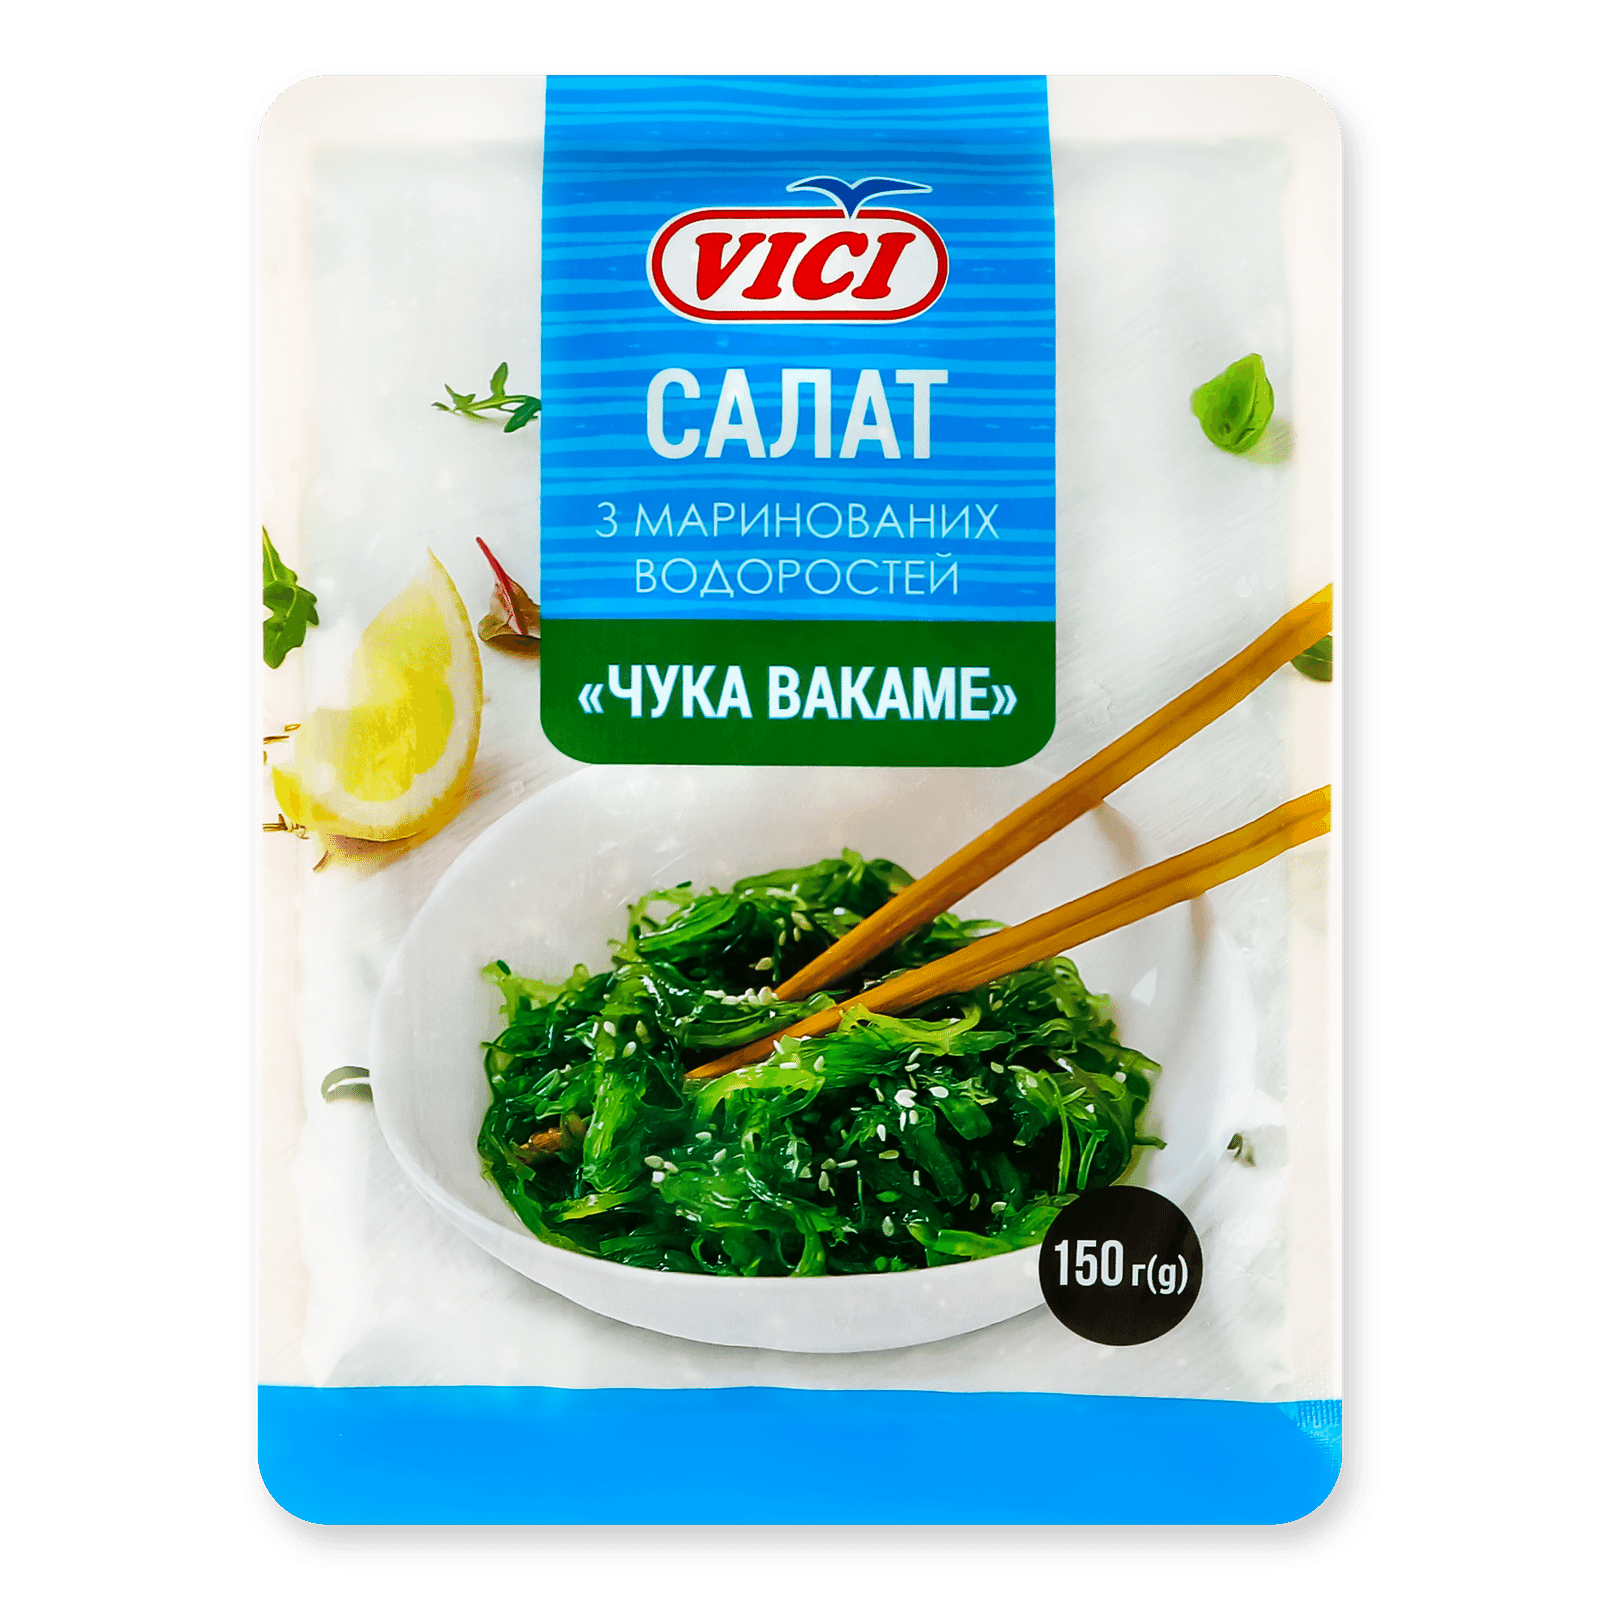 Салат VICI з водоростей вакаме та кунжутом - 1